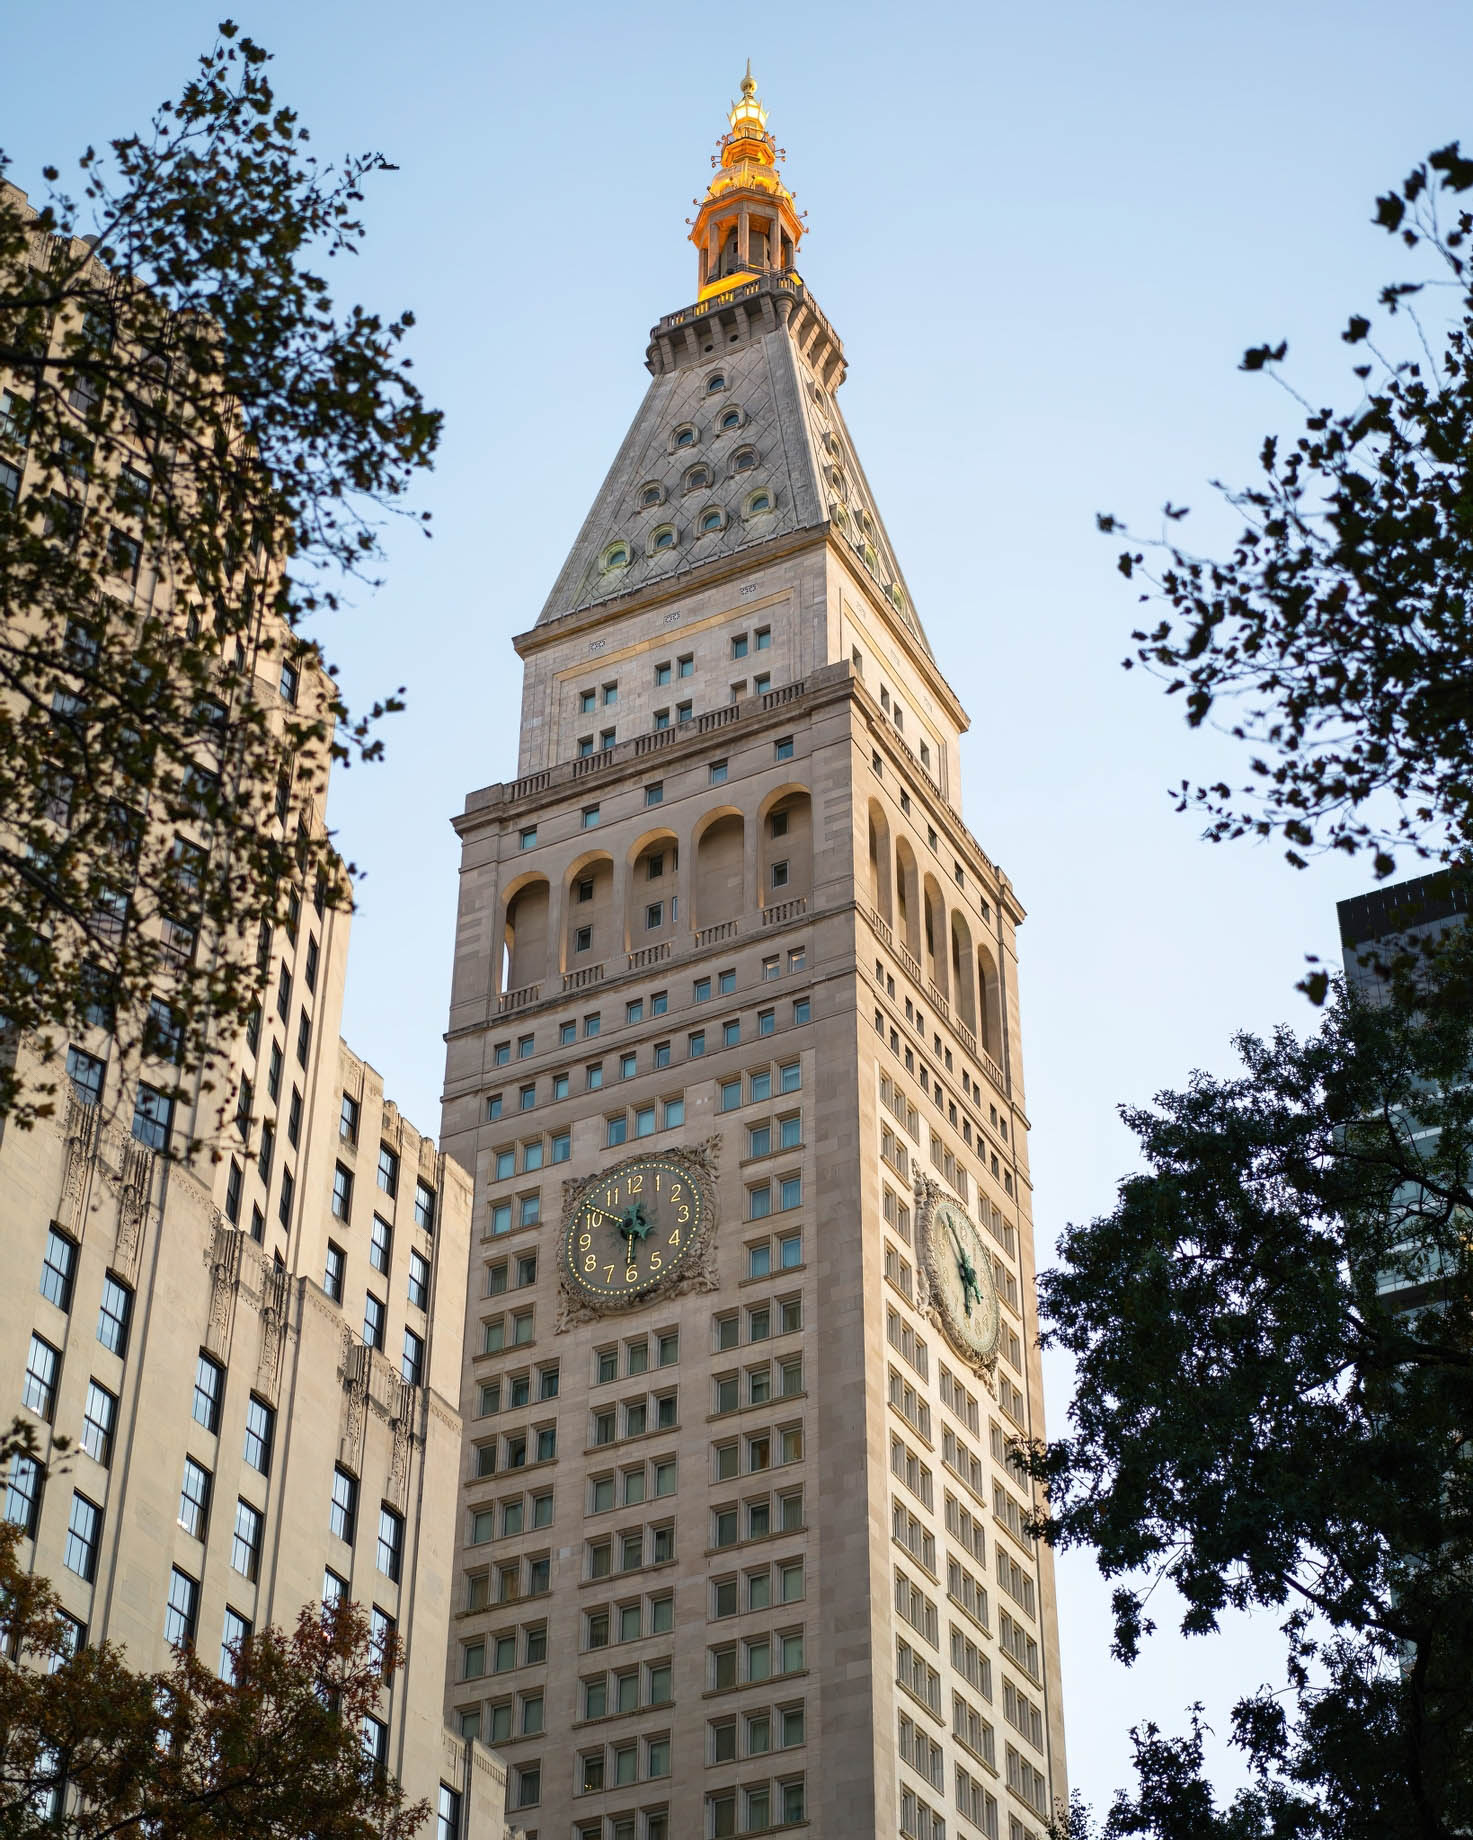 The New York EDITION Hotel – New York, NY, USA – Clocktower Building